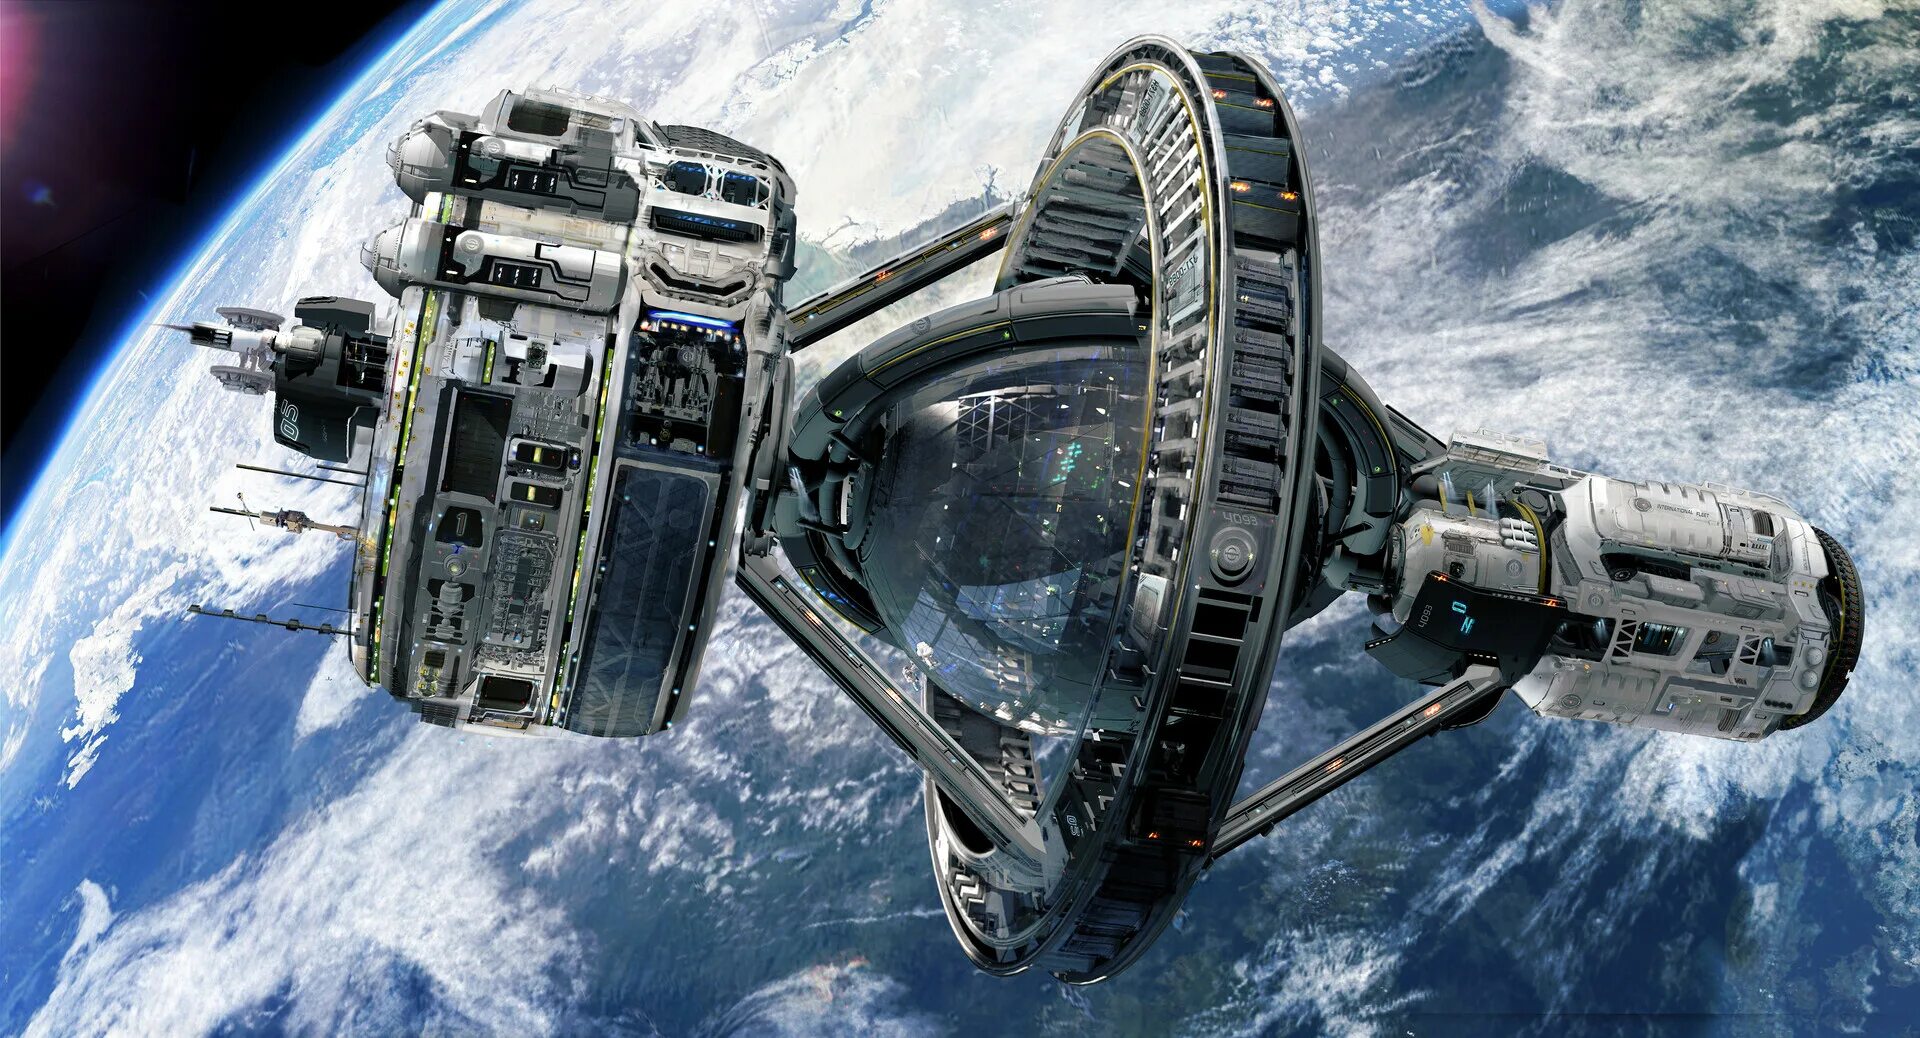 Mir schon. Космический корабль Интерстеллар. Интерстеллар шаттл концепт. Фантастическая Космическая станция. Космические корабли будущего.